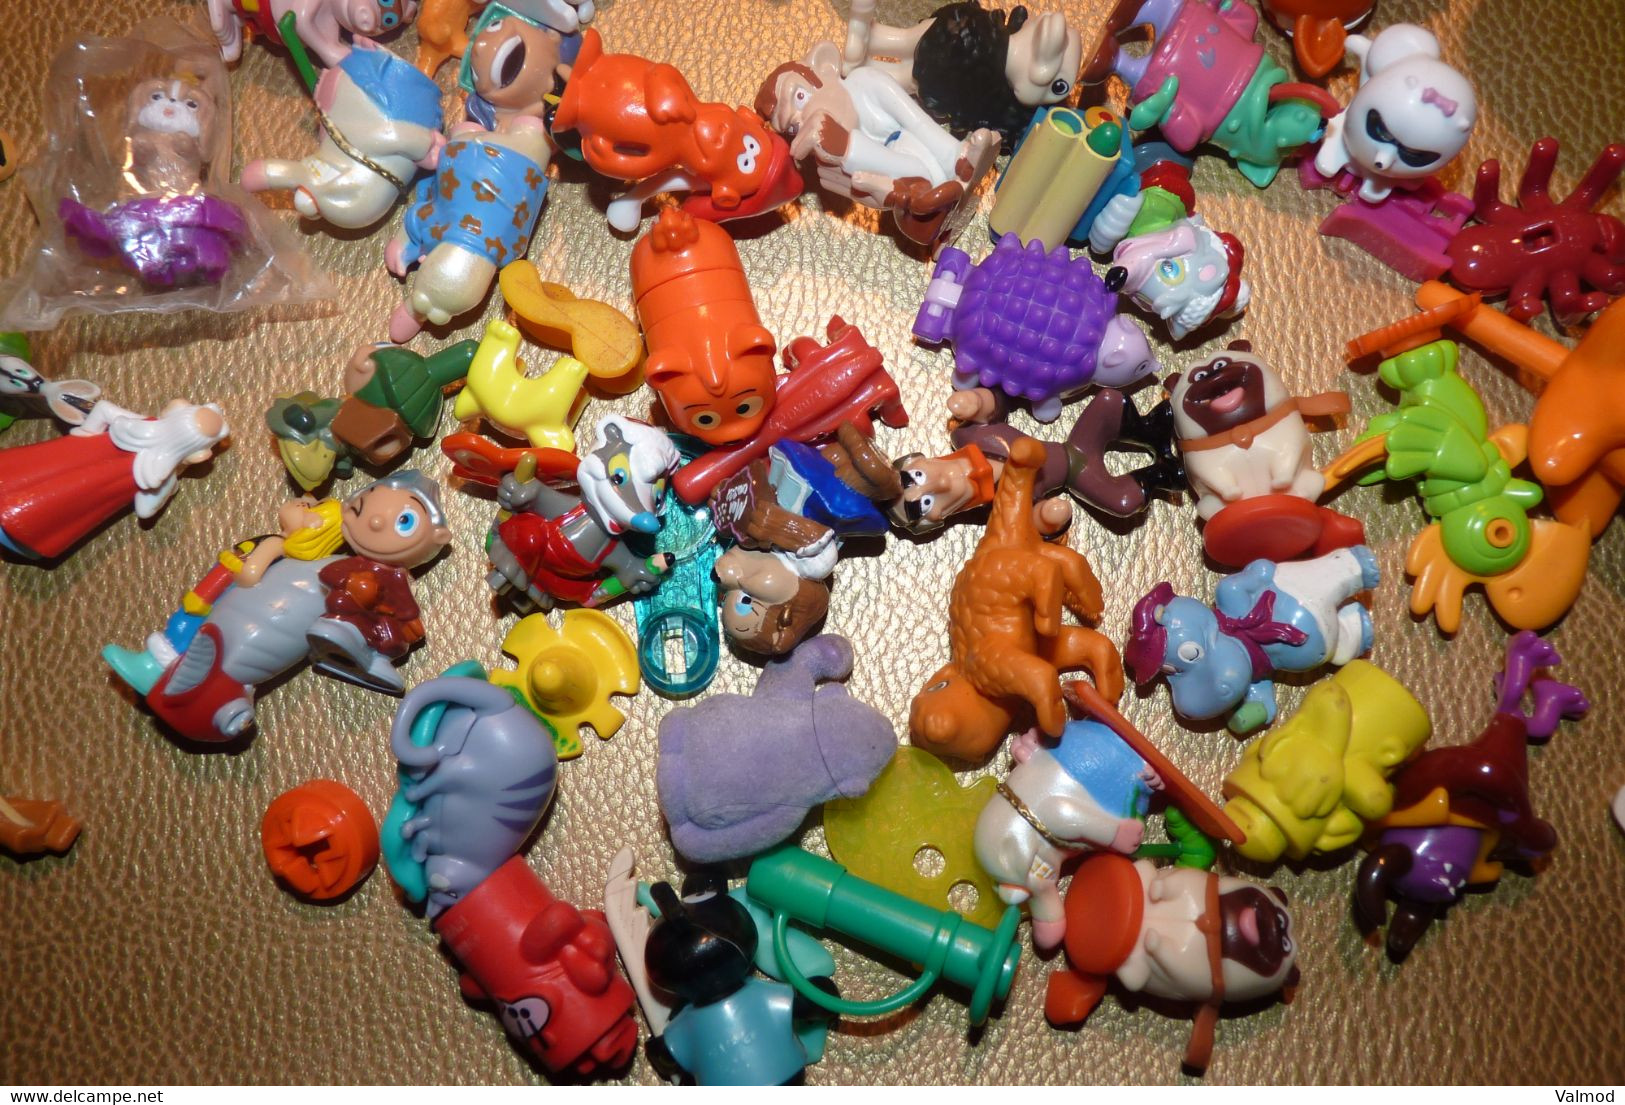 Lot +170 figurines diverses+ accessoires Kinder, Patate, animaux, indiens, cow-boys , Dysney et autres + DVD Snoopy.